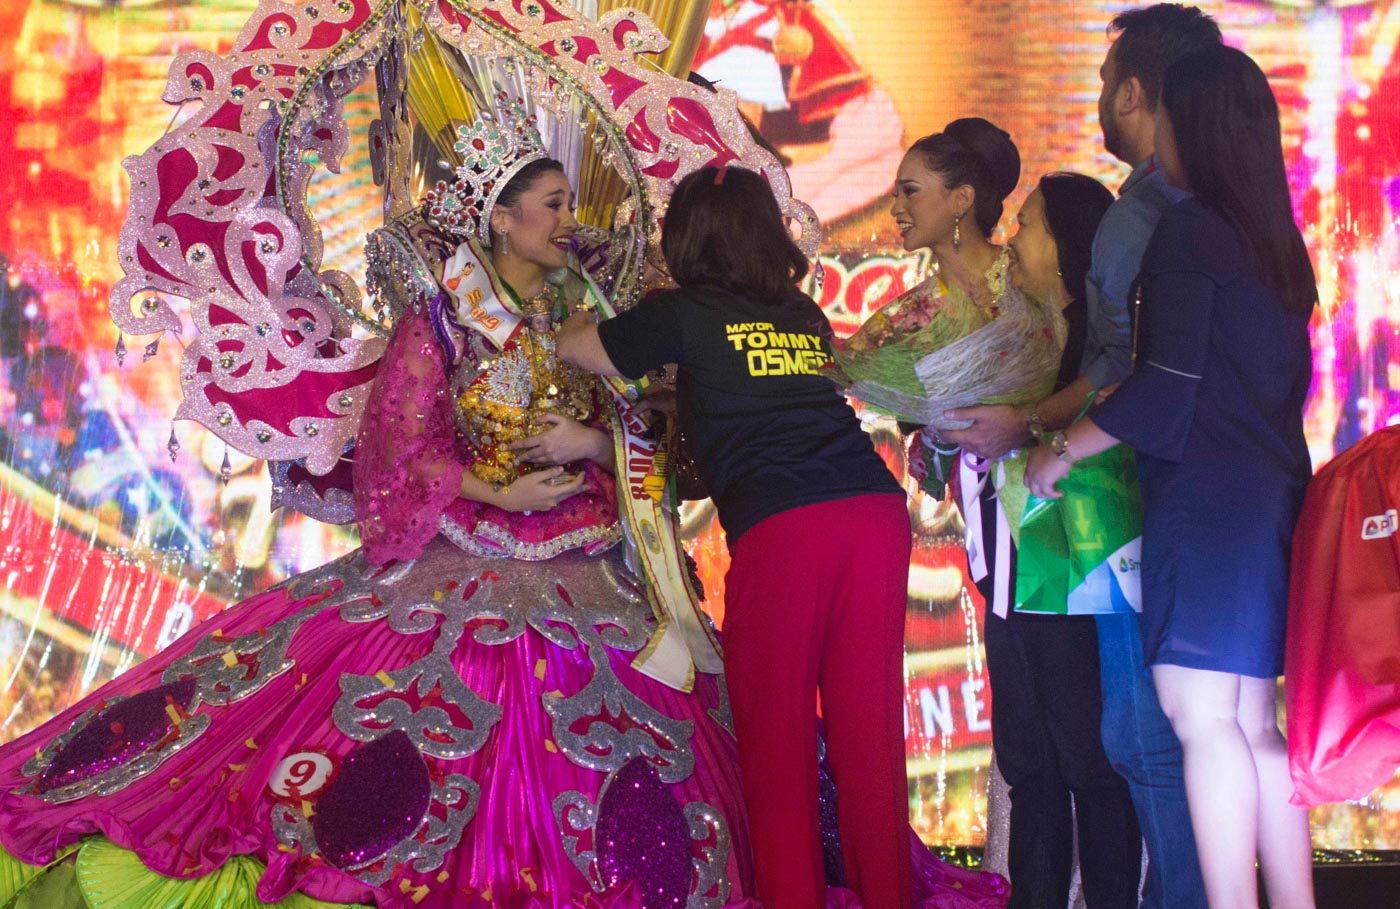 Shaila Mae Rebortera is Cebu’s Sinulog Queen 2018